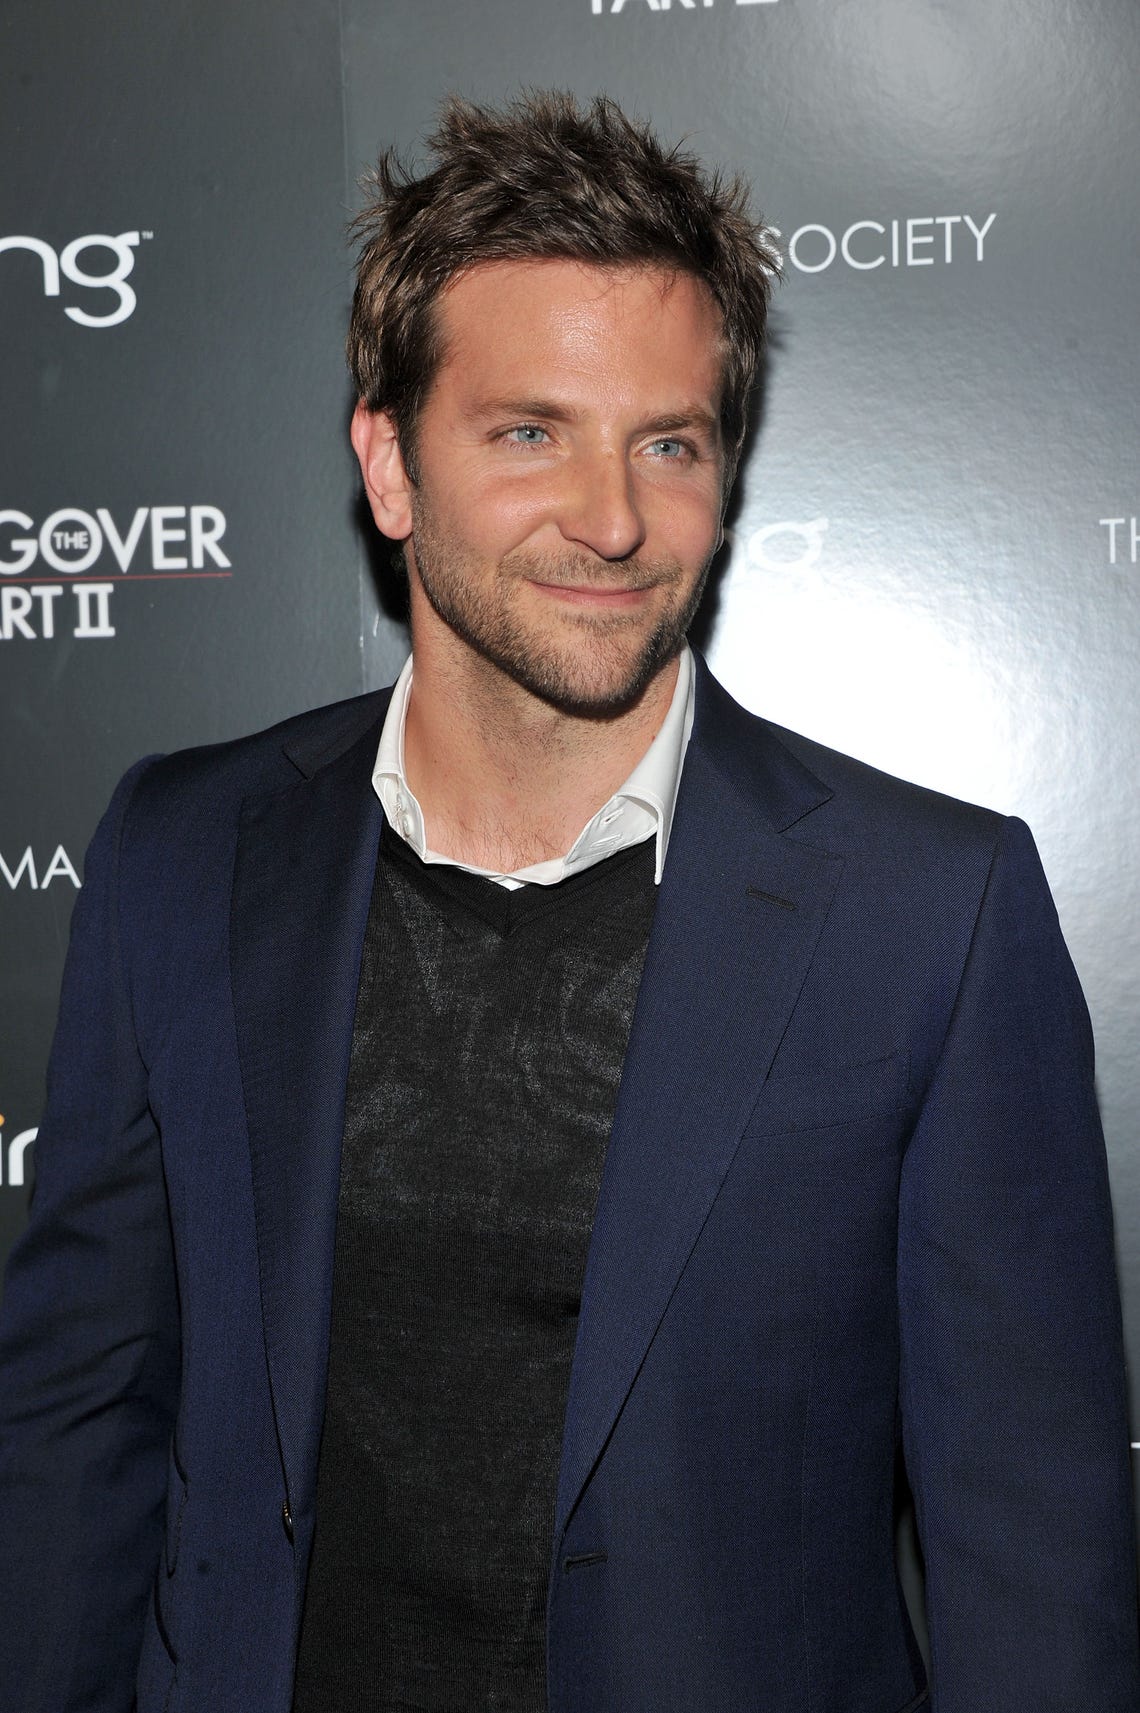 Bradley Cooper Los Angeles Premiere of 'The Hangover Part II' held